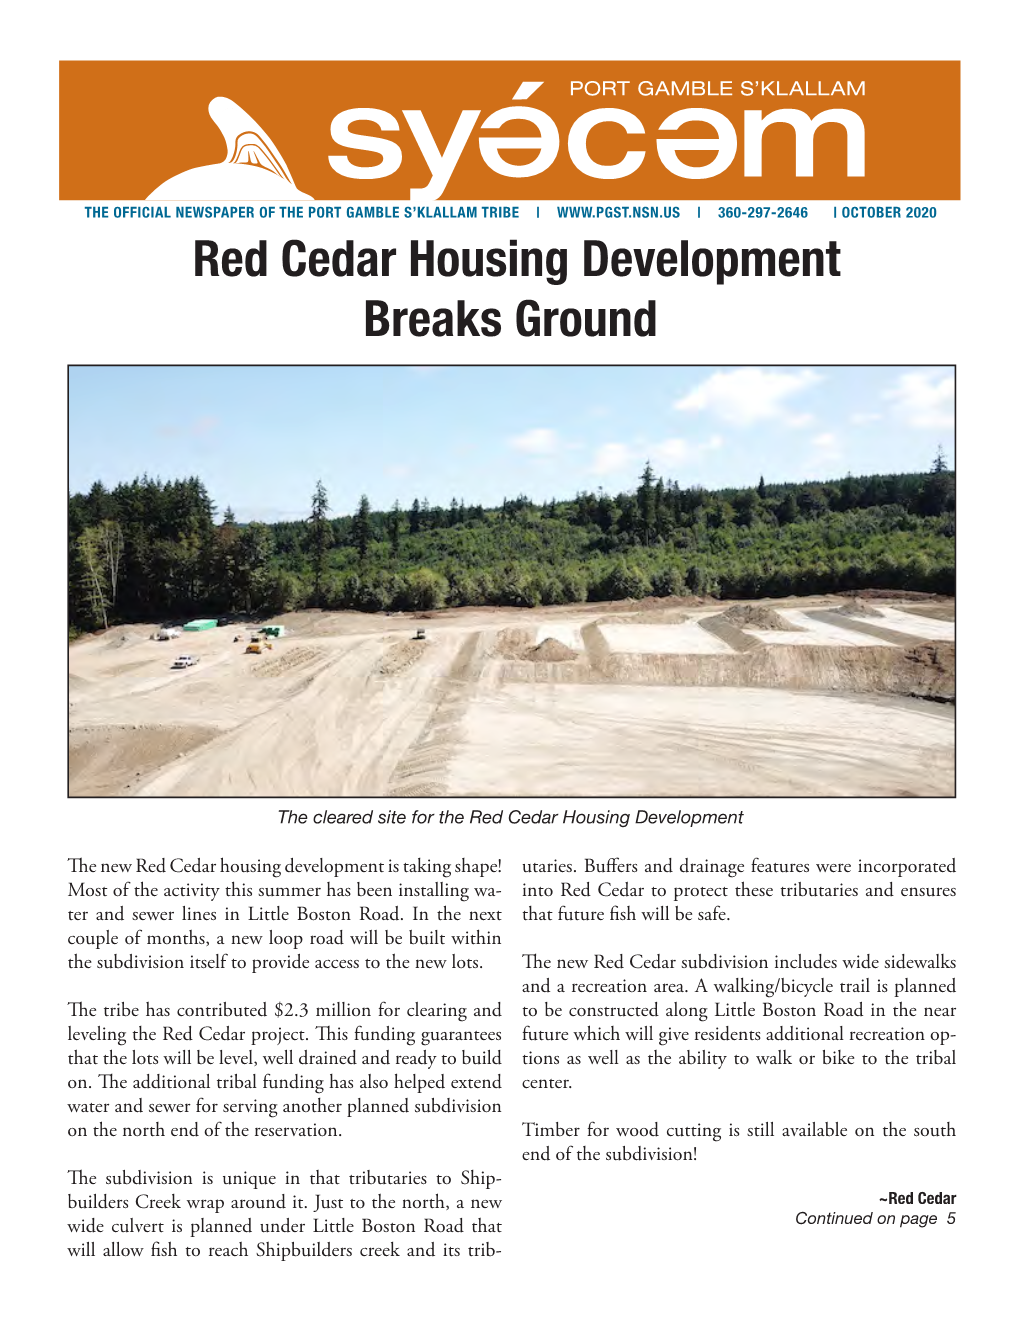 Red Cedar Housing Development Breaks Ground